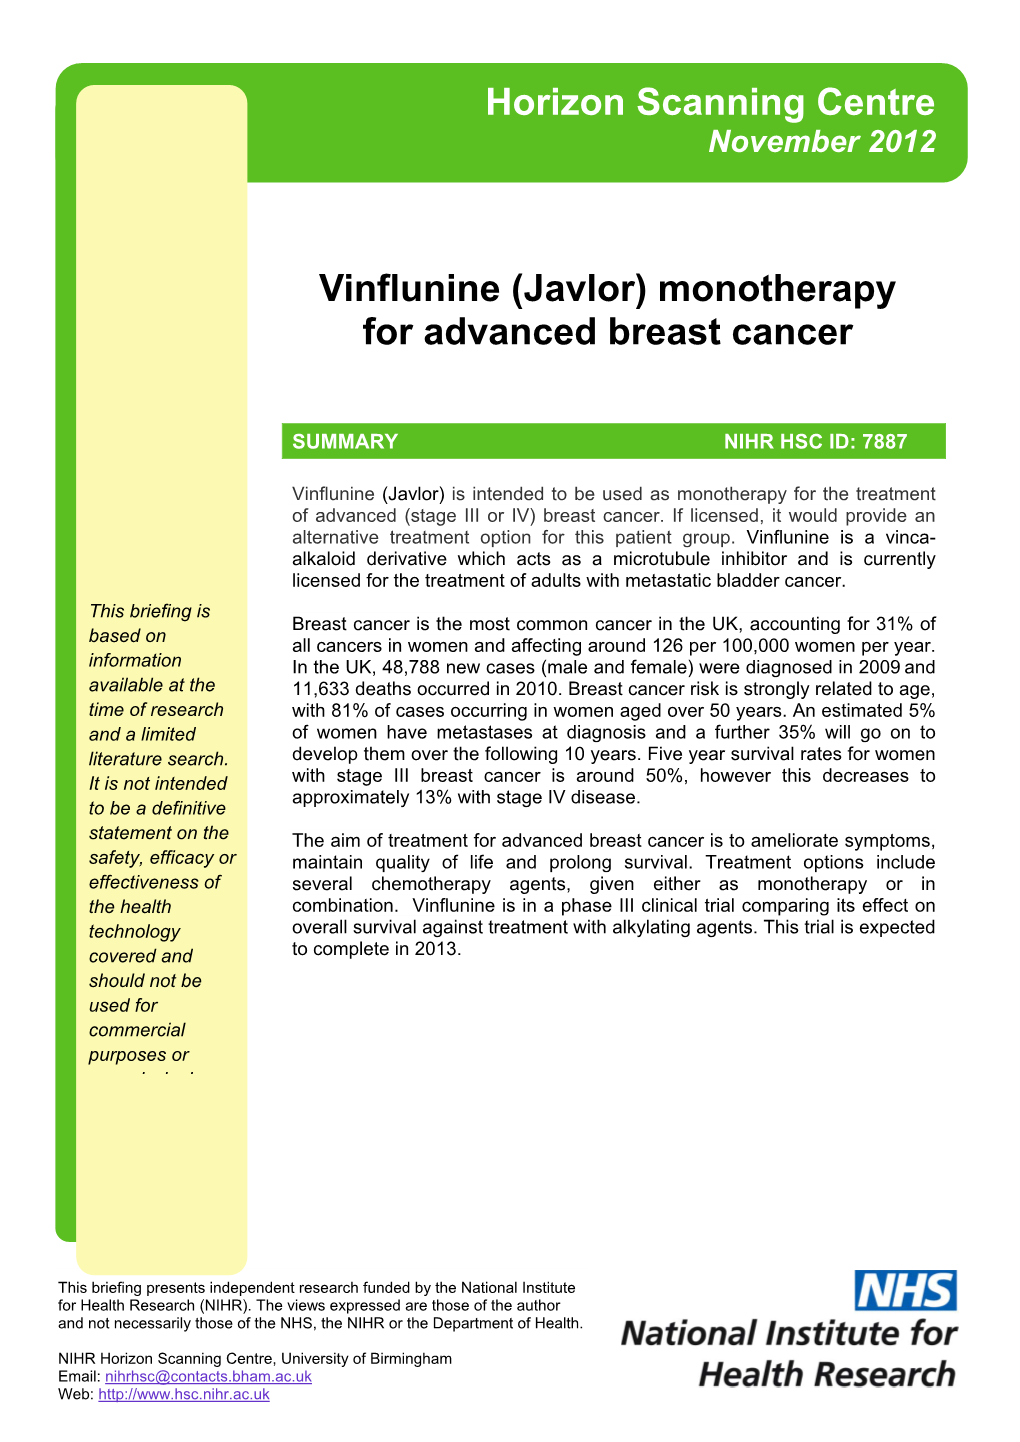 Vinflunine (Javlor) Monotherapy for Advanced Breast Cancer